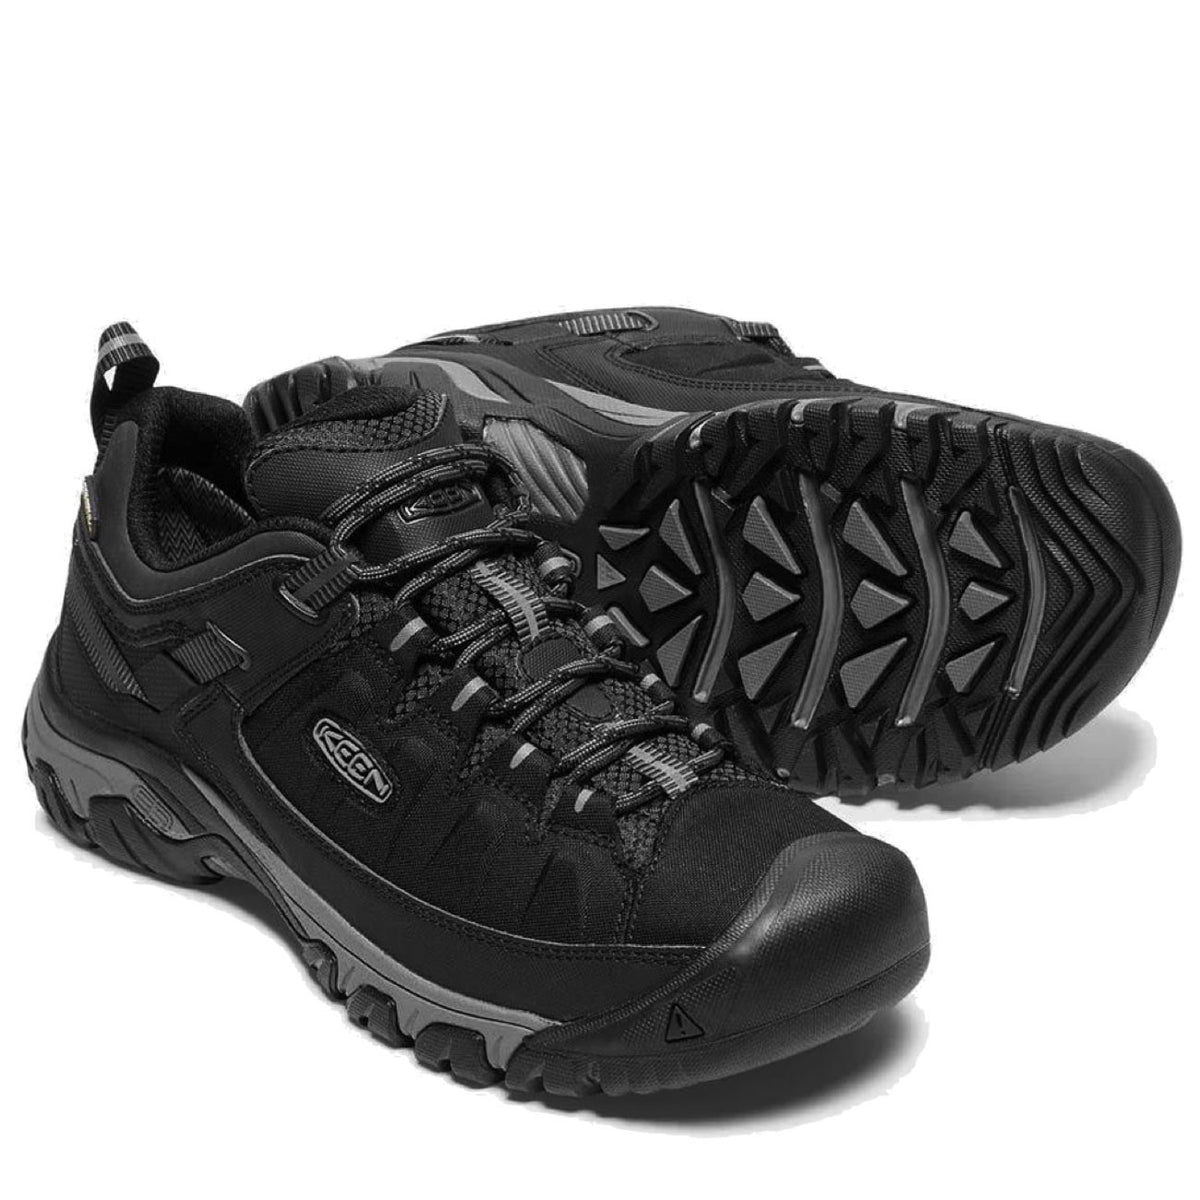 Keen, Targhee EXP WP Mens, Shoe, Black Steel Gray Hiking Shoes Keen 